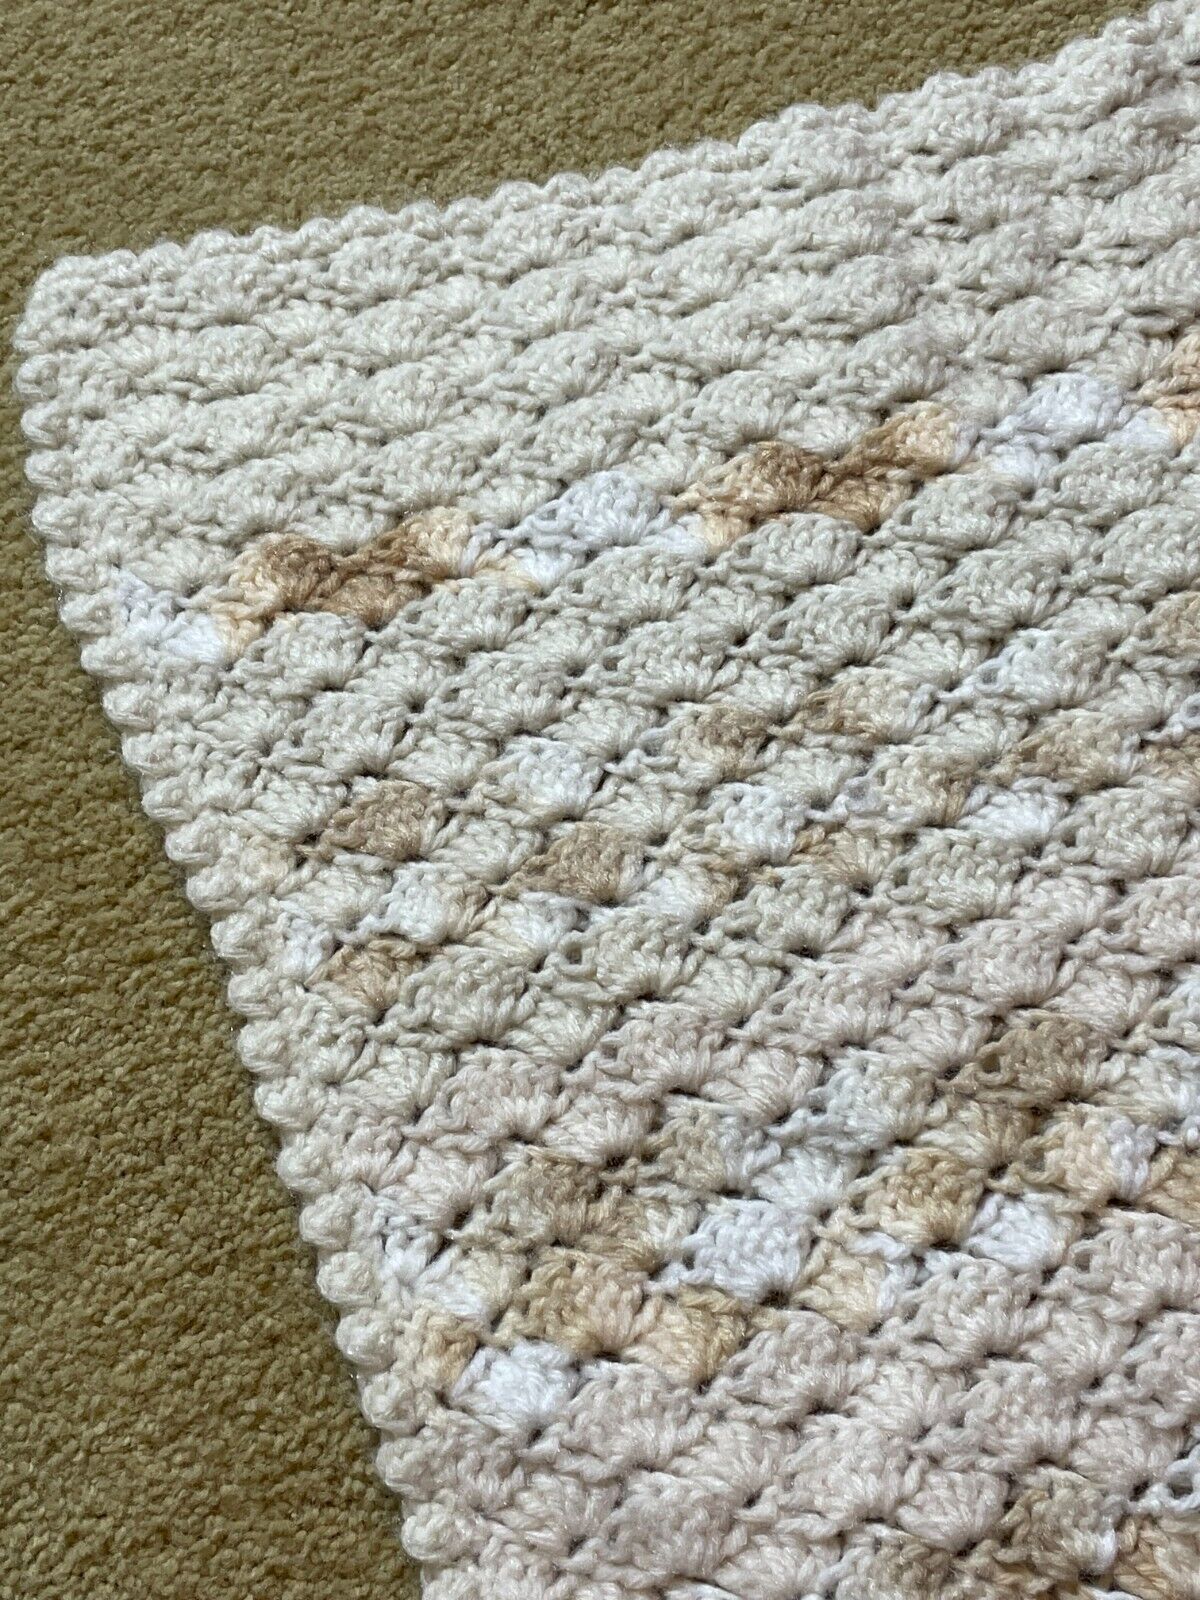 Granny Knit Handmade Crochet Afghan Blanket Throw Marbled Beige Ivory 66 x 48